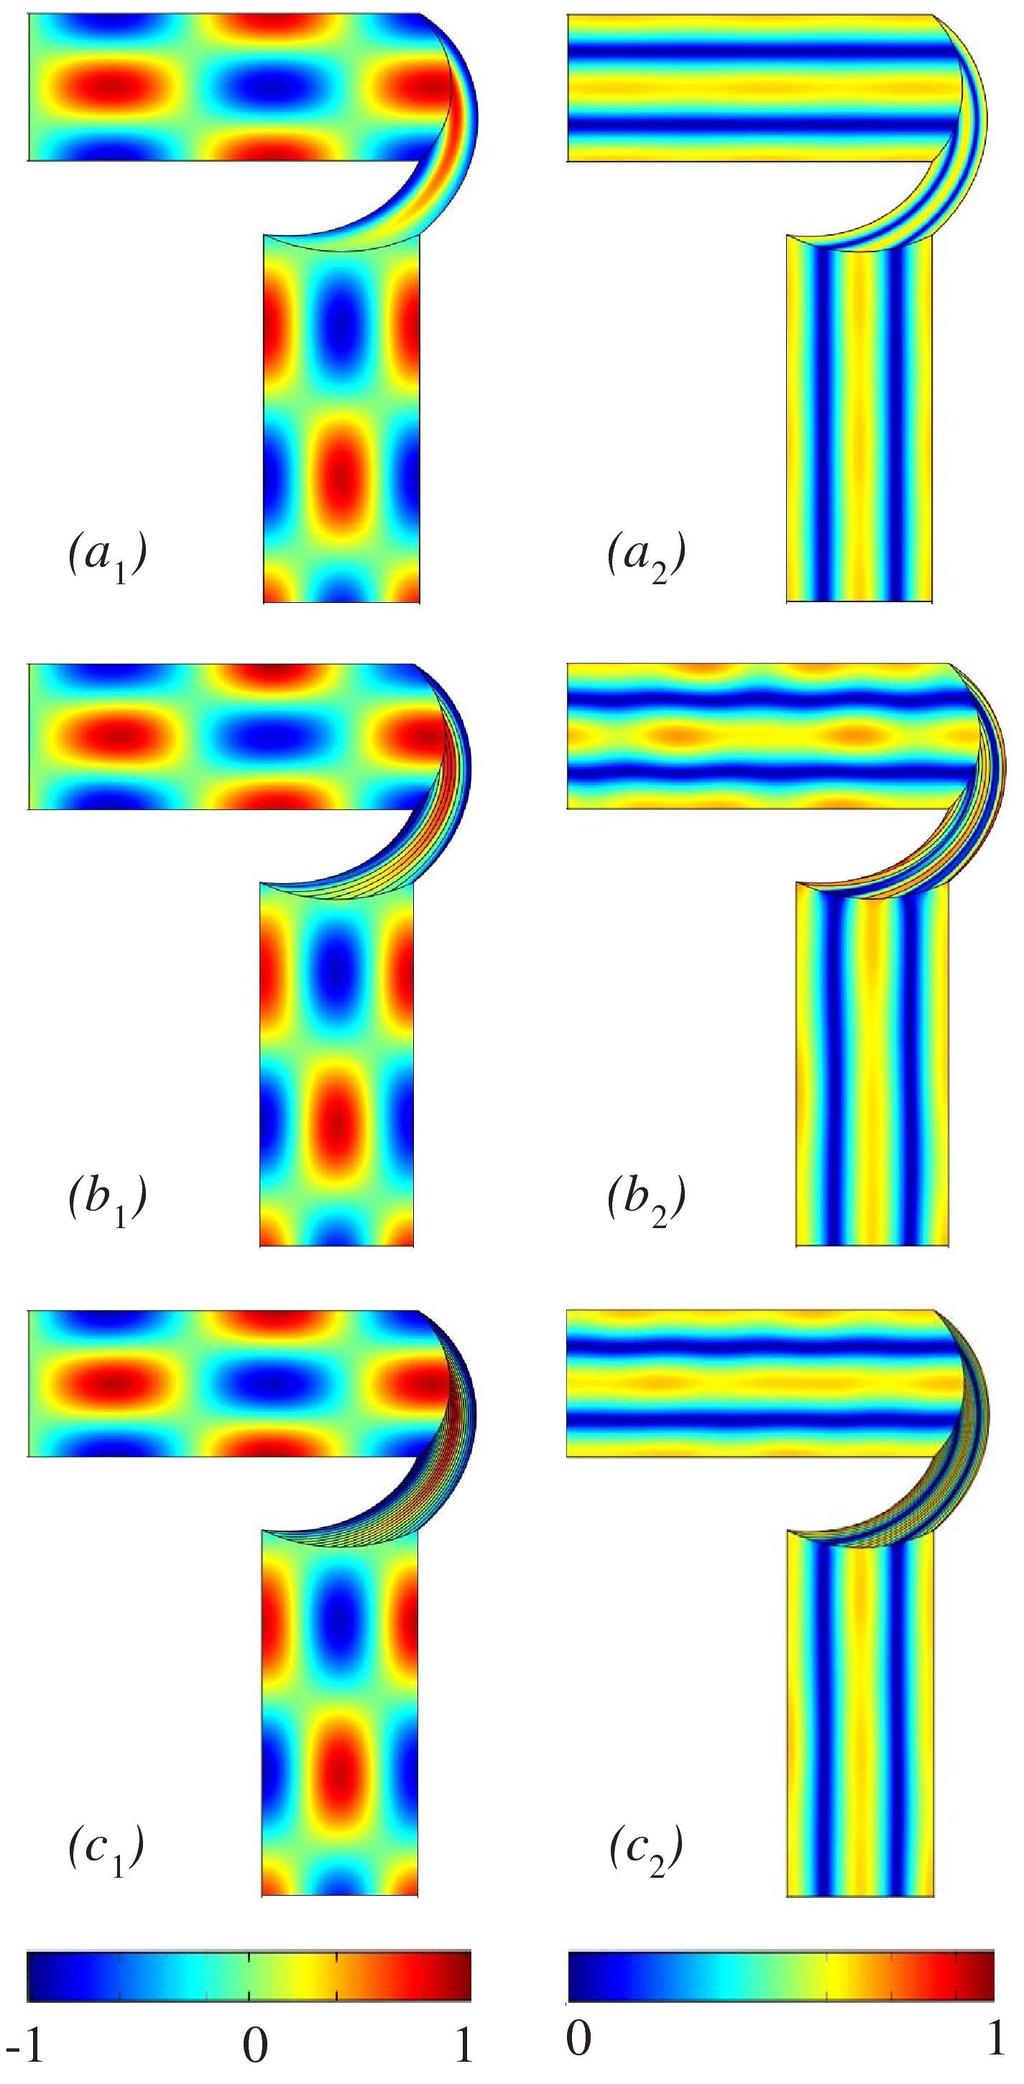 FIG. 9: (Color online) FEM simulation results for non-magnetic waveguide bend: (a) ideal bend, (b) bend with 13 dielectric layers and (c) bend with 26 dielectric layers.